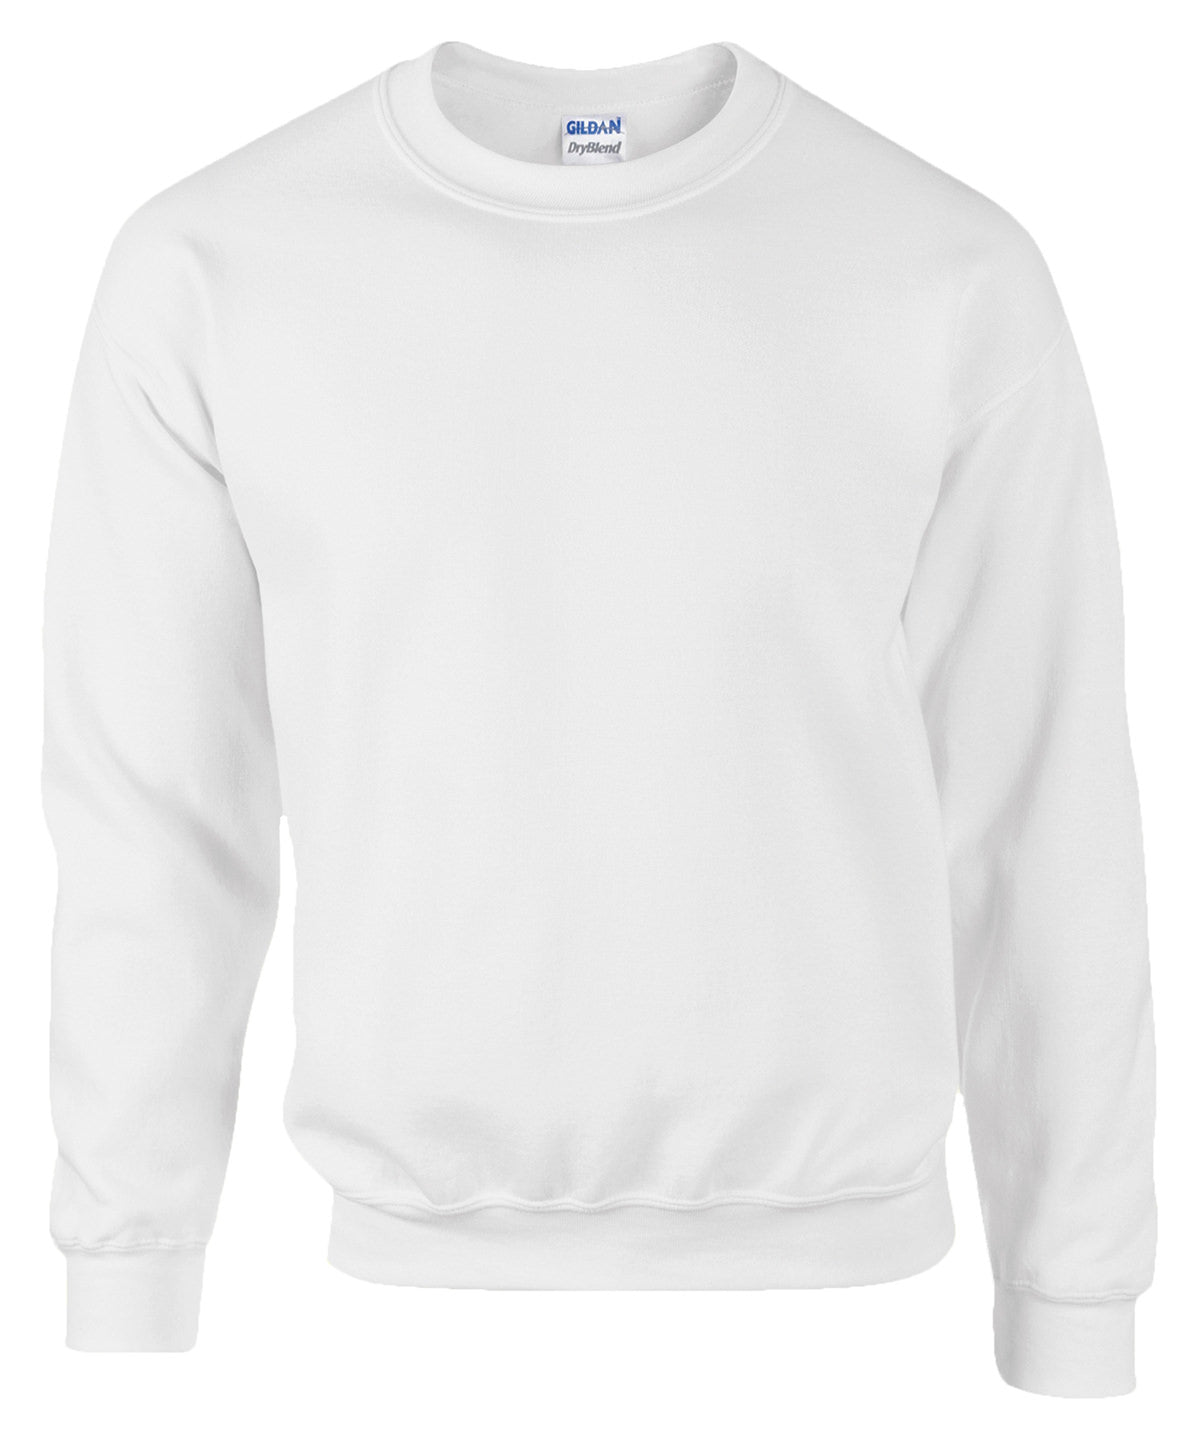 Personalised Sweatshirts - Light Grey Gildan DryBlend® adult crew neck sweatshirt